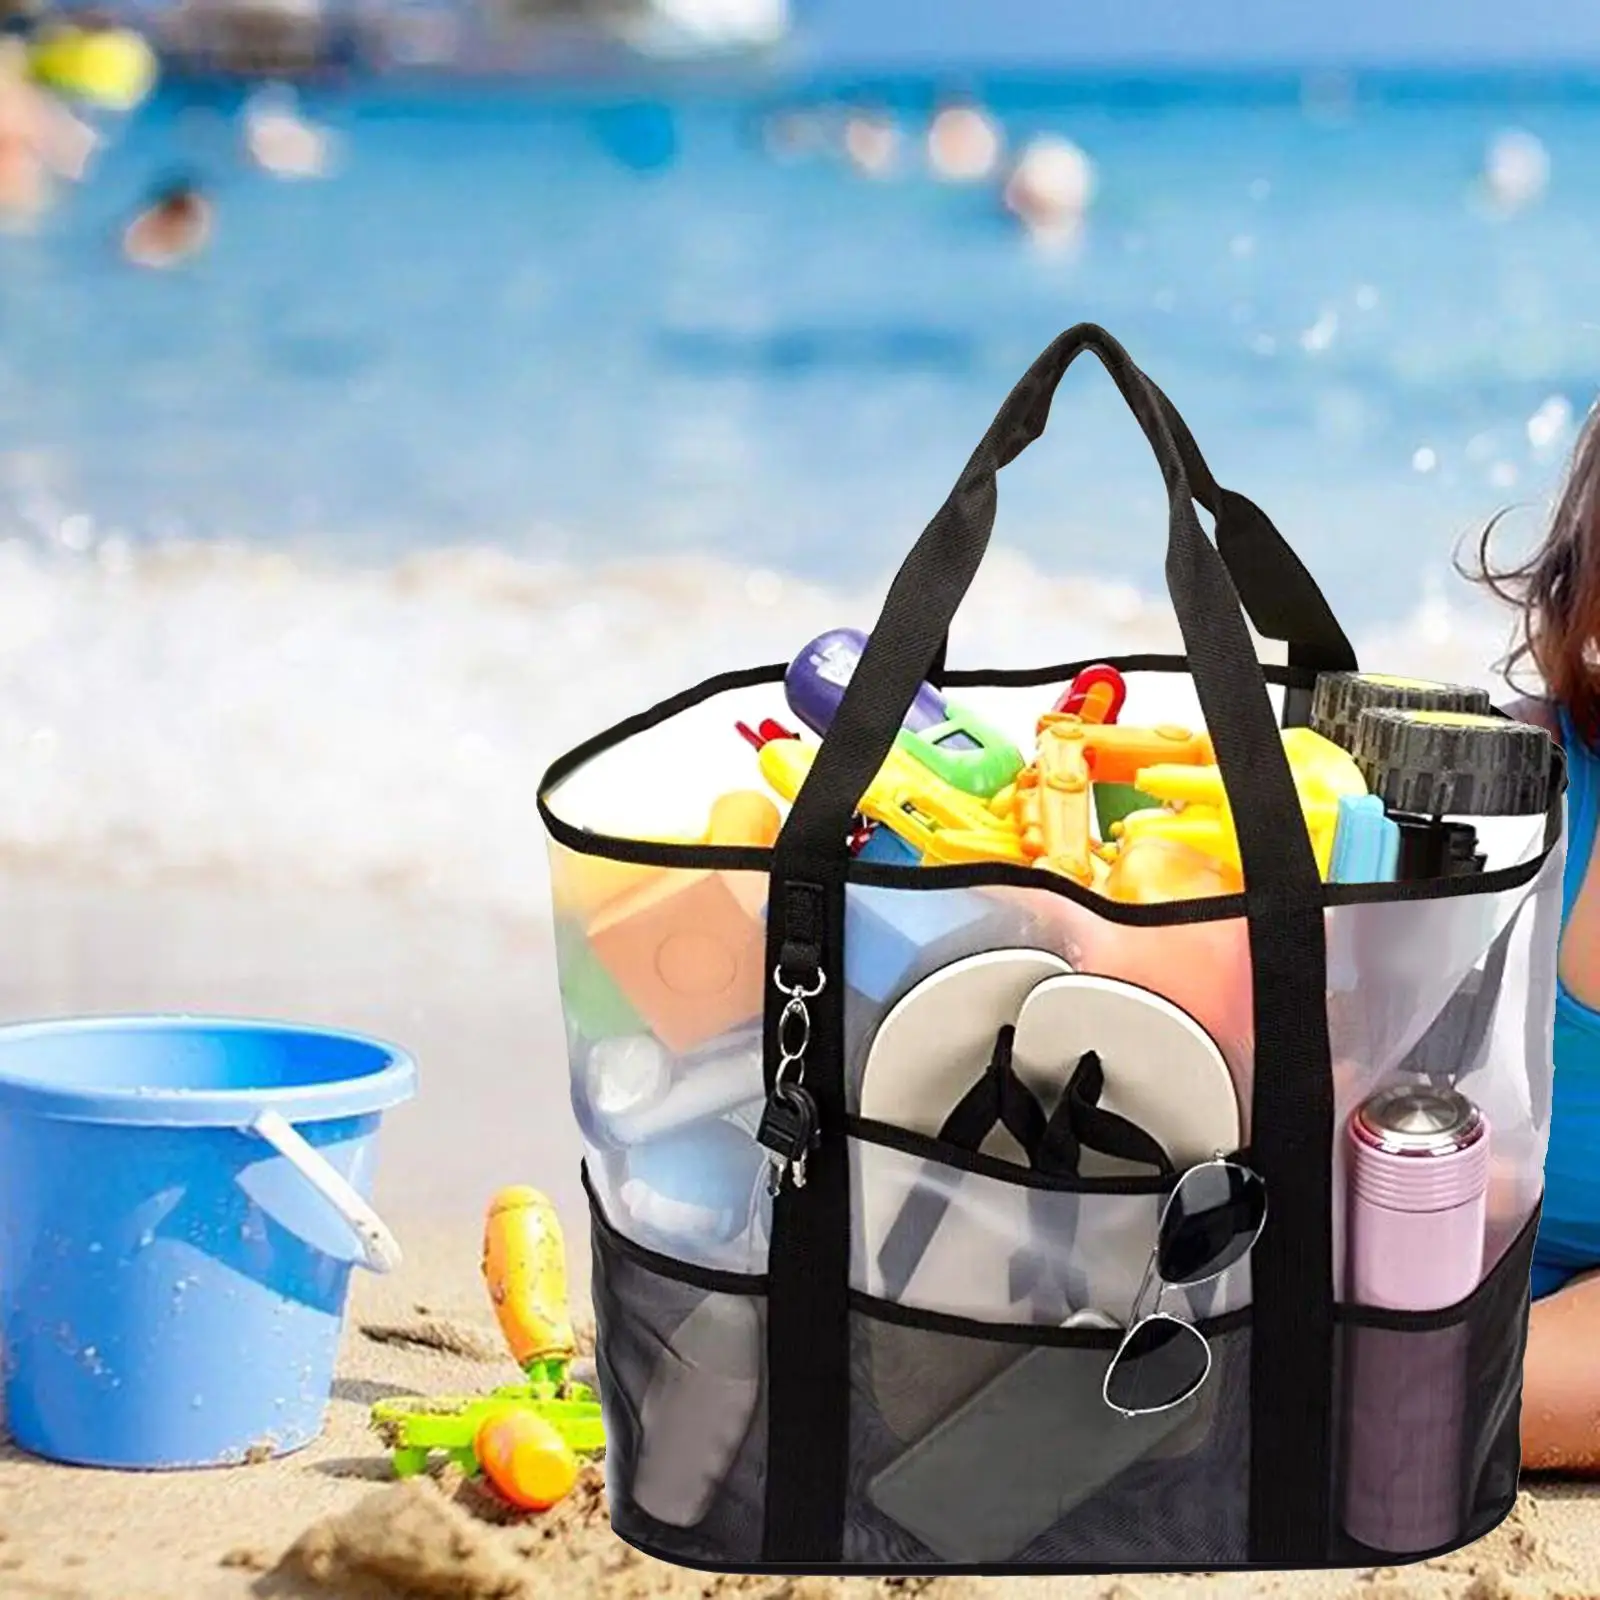 Beach Bag Tote Bag Lightweight Handbag Sand Toy Women Makeup Storage Bag for Shopping Travel Vacation Swimming Pool Outdoor